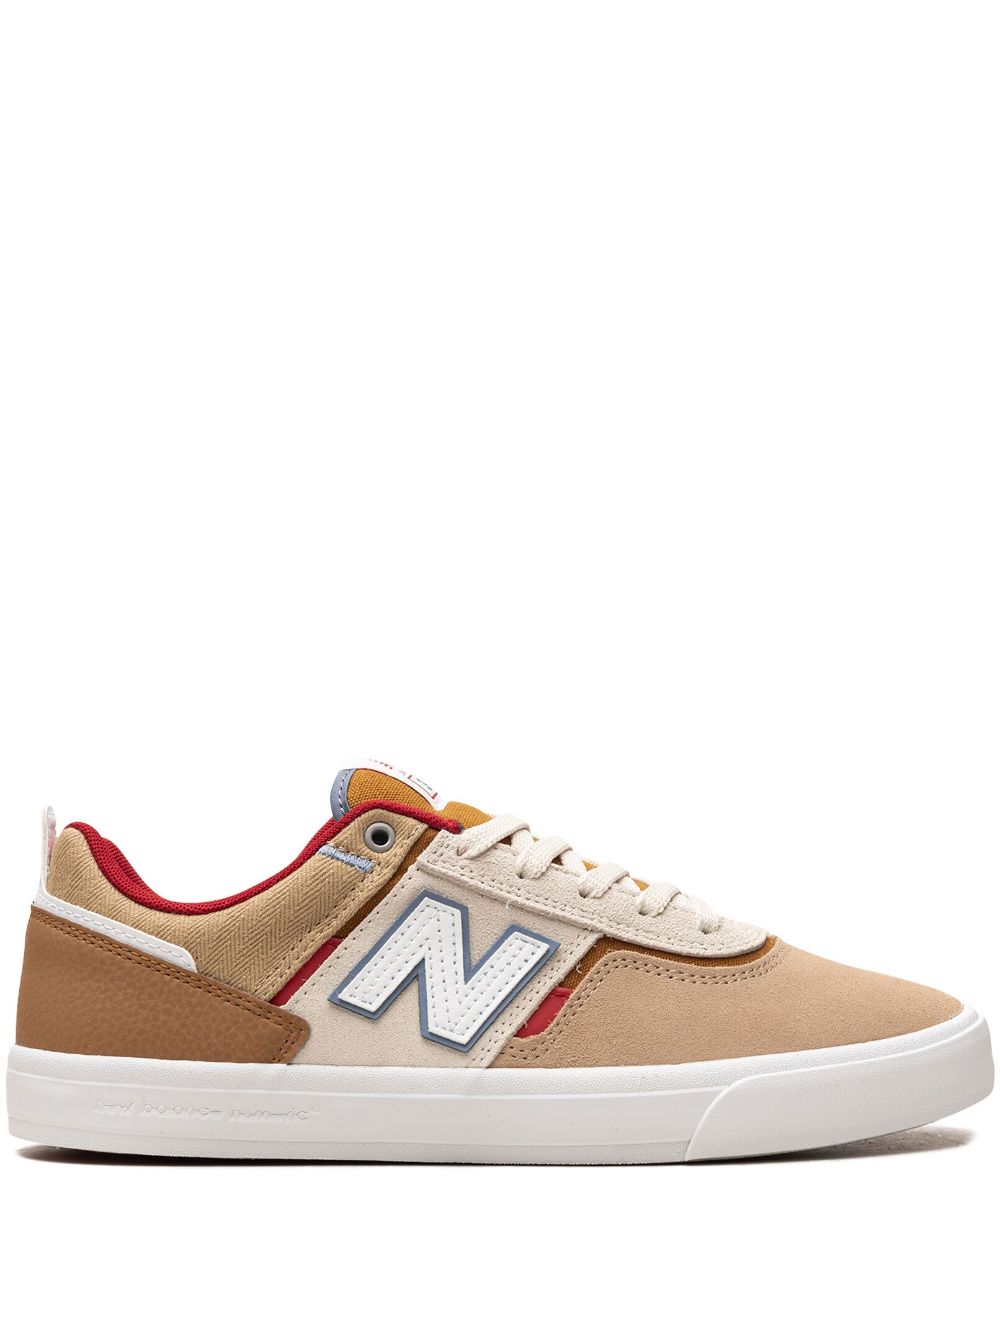 New Balance x Jamie Foy Numeric 306 "Brown/White" sneakers